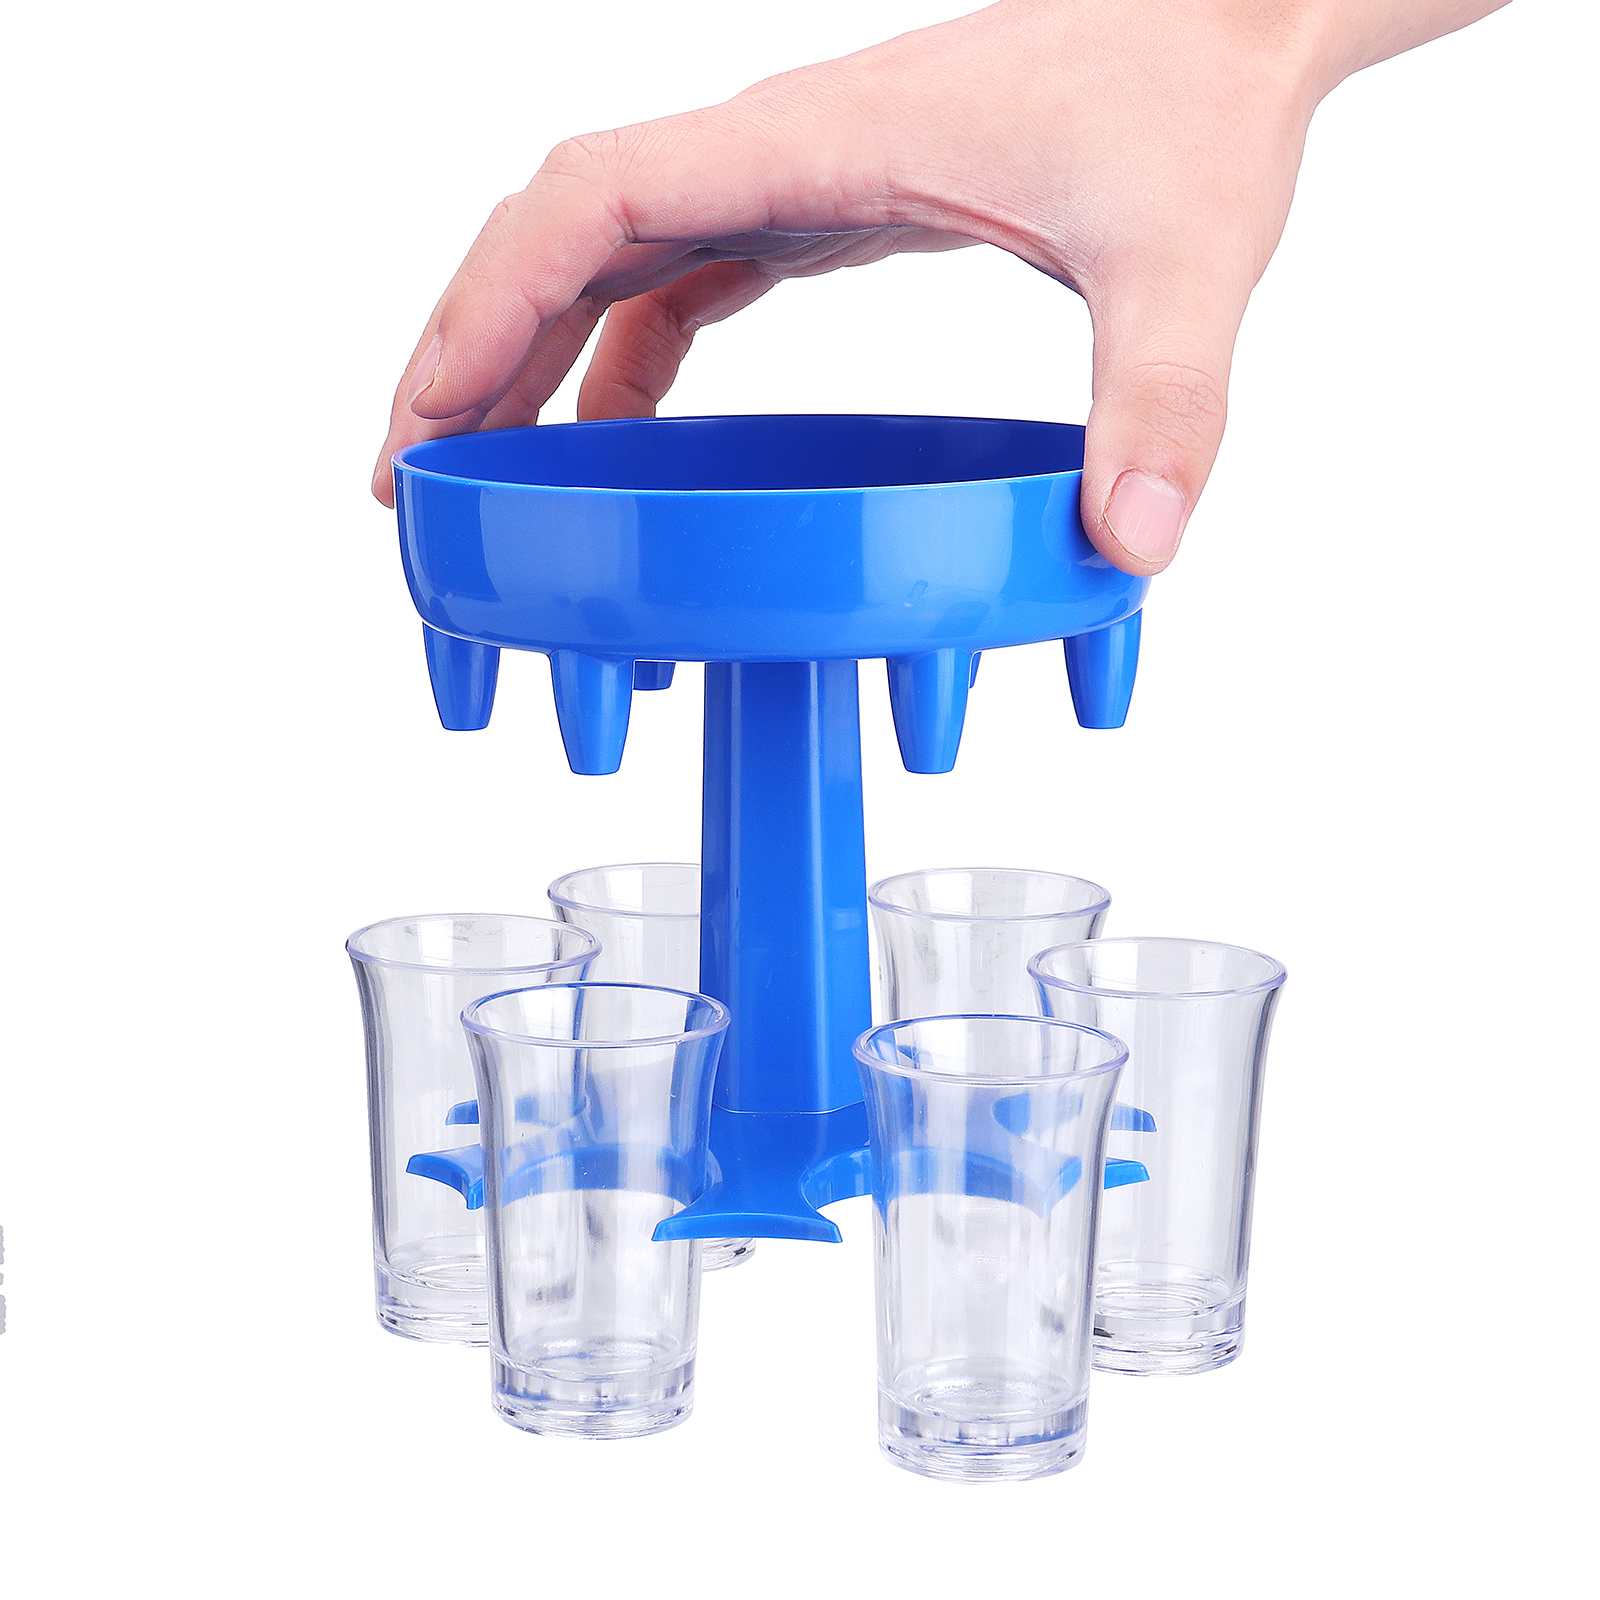 6-Shot-Glass-Dispenser-with-6-Cups-Hanging-Holder-Stand-Rack-Carrier-Caddy-Liquor-Dispenser-Gifts-Dr-1898947-10